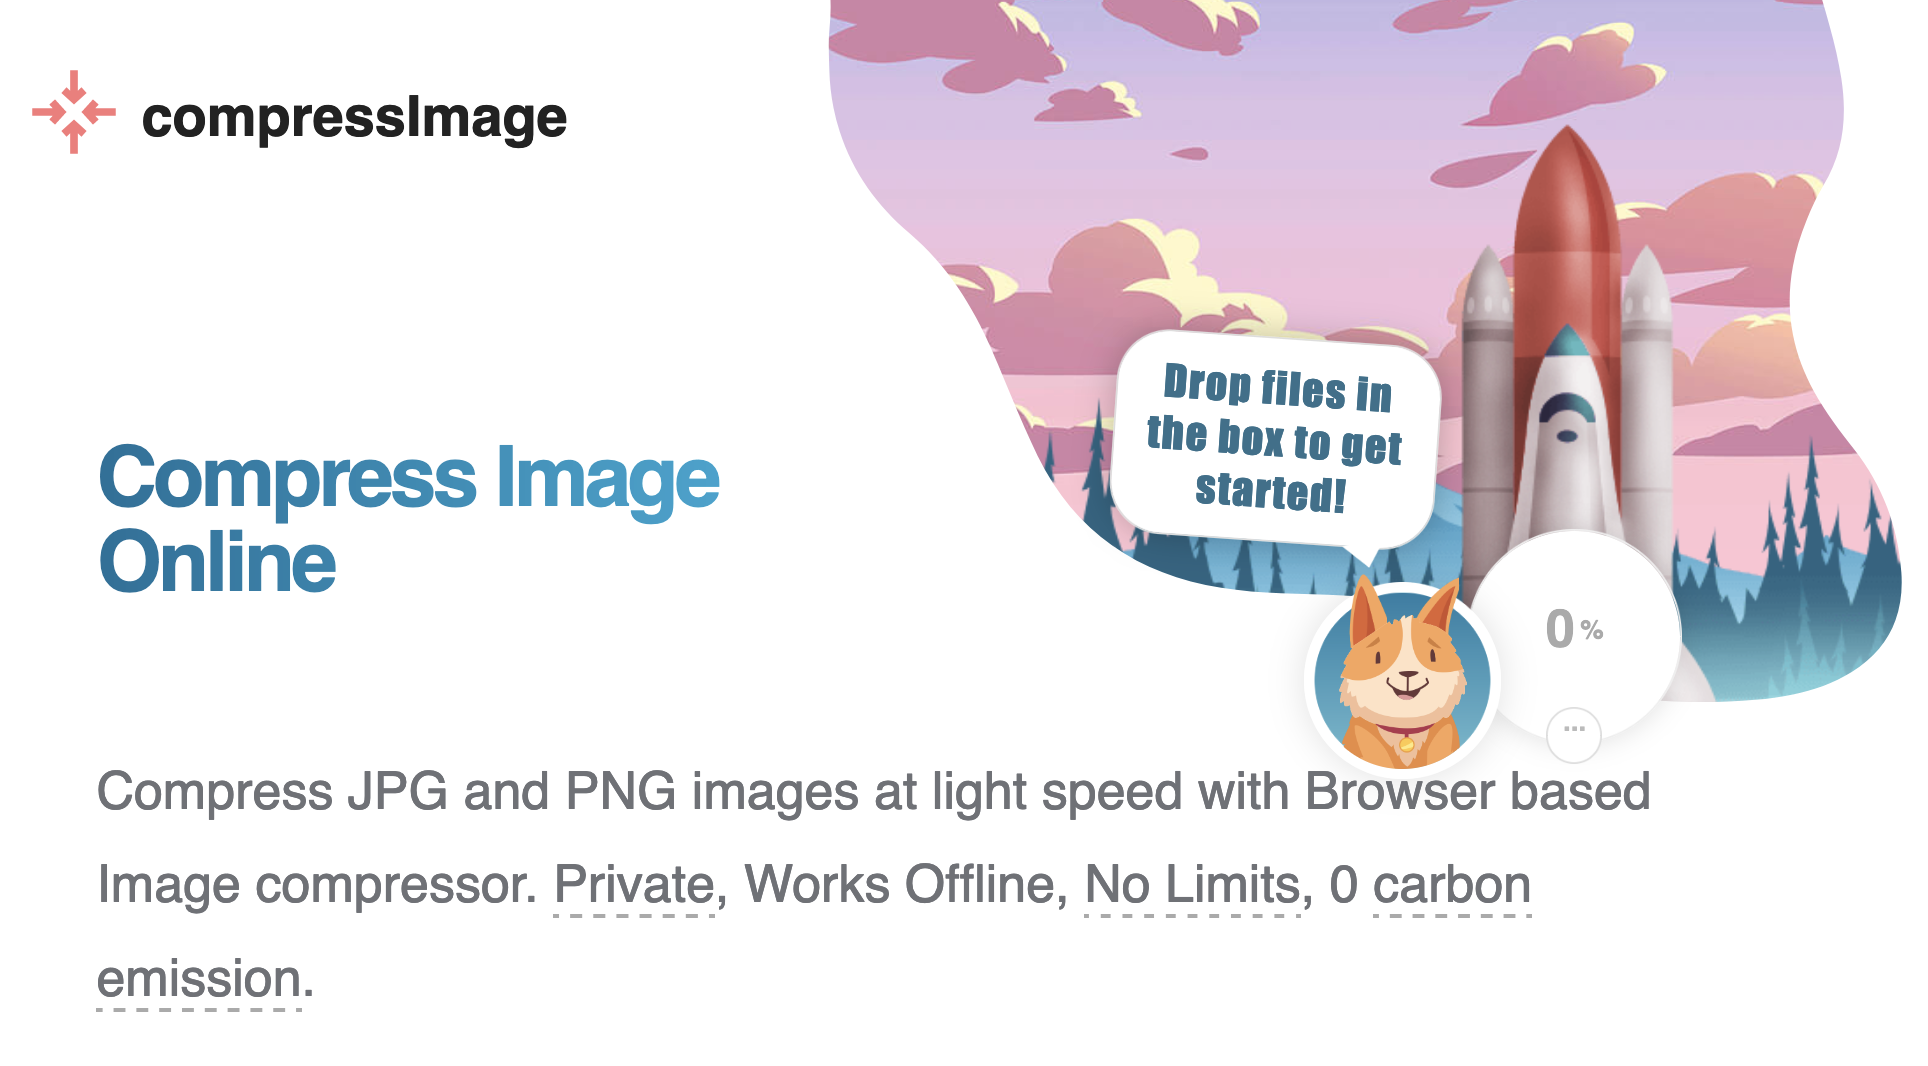  Compress Image Online: Compress JPG and PNG images at light speed with Browser based Image compressor. Private, Works Offline, No Limits, 0 carbon emission.